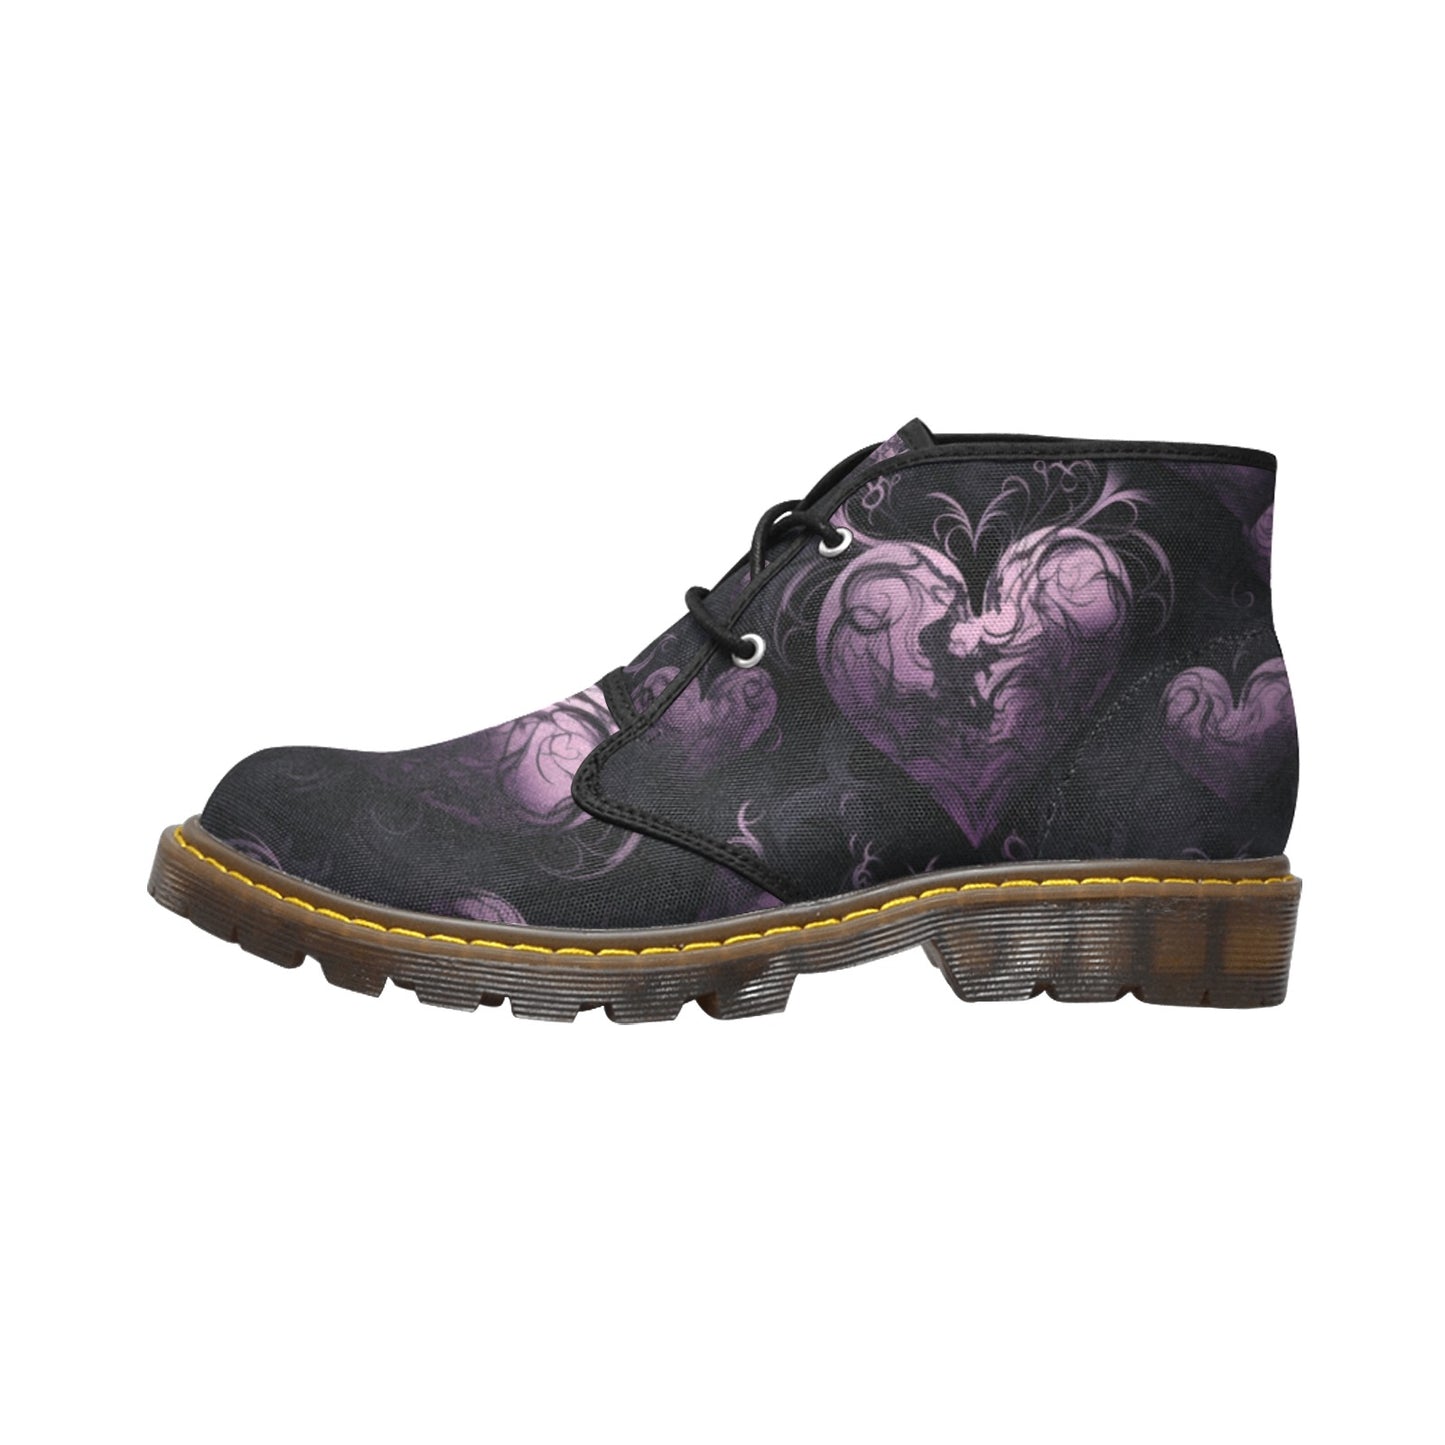 Gothic Purple Hearts Canvas Chukka Boots